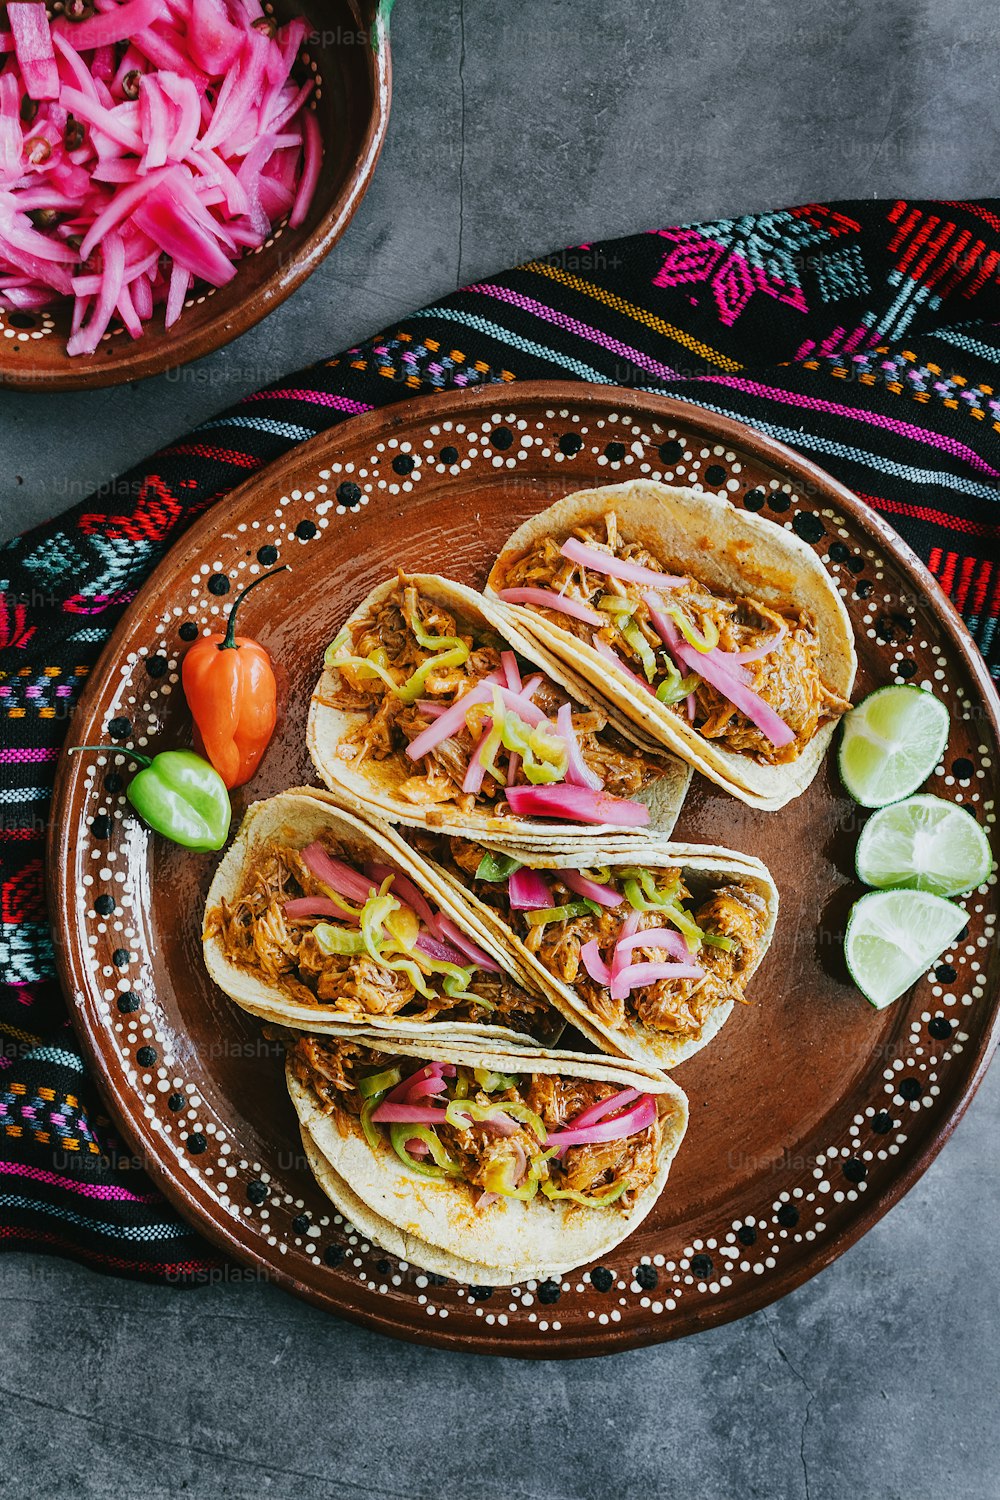 Tacos mexicanos de cochinita pibil con salsa de habanero comida tradicional en Yucatán México